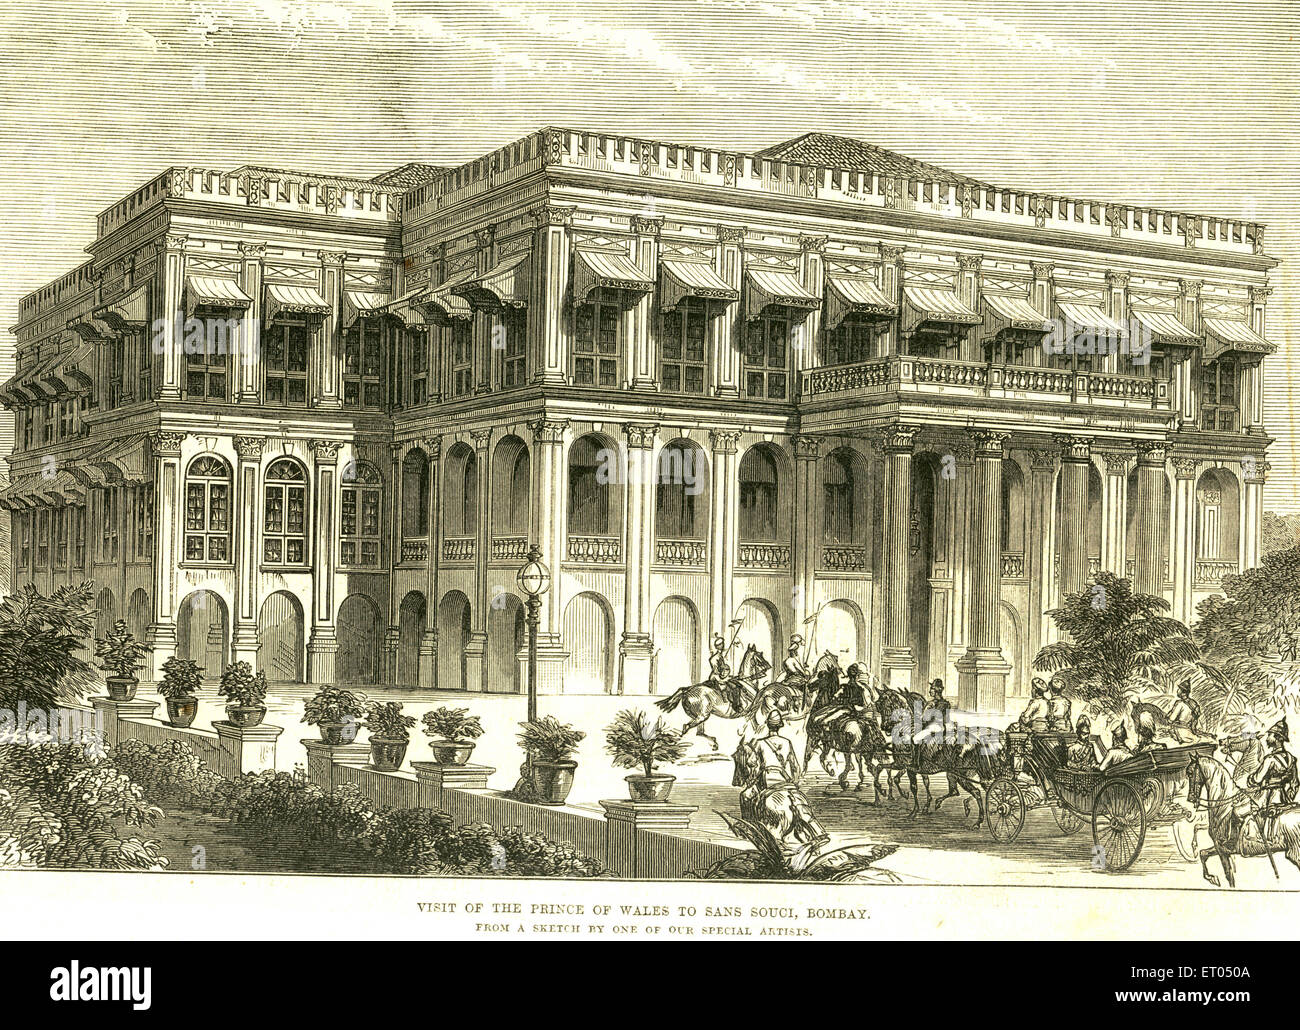 Besuch des Prinzen von Wales im Sans Souci, jetzt Masina Hospital, 5.. Februar 1876, Bombay, Mumbai, Maharashtra, Indien, Asien, alter Jahrgang 1800s Bild Stockfoto